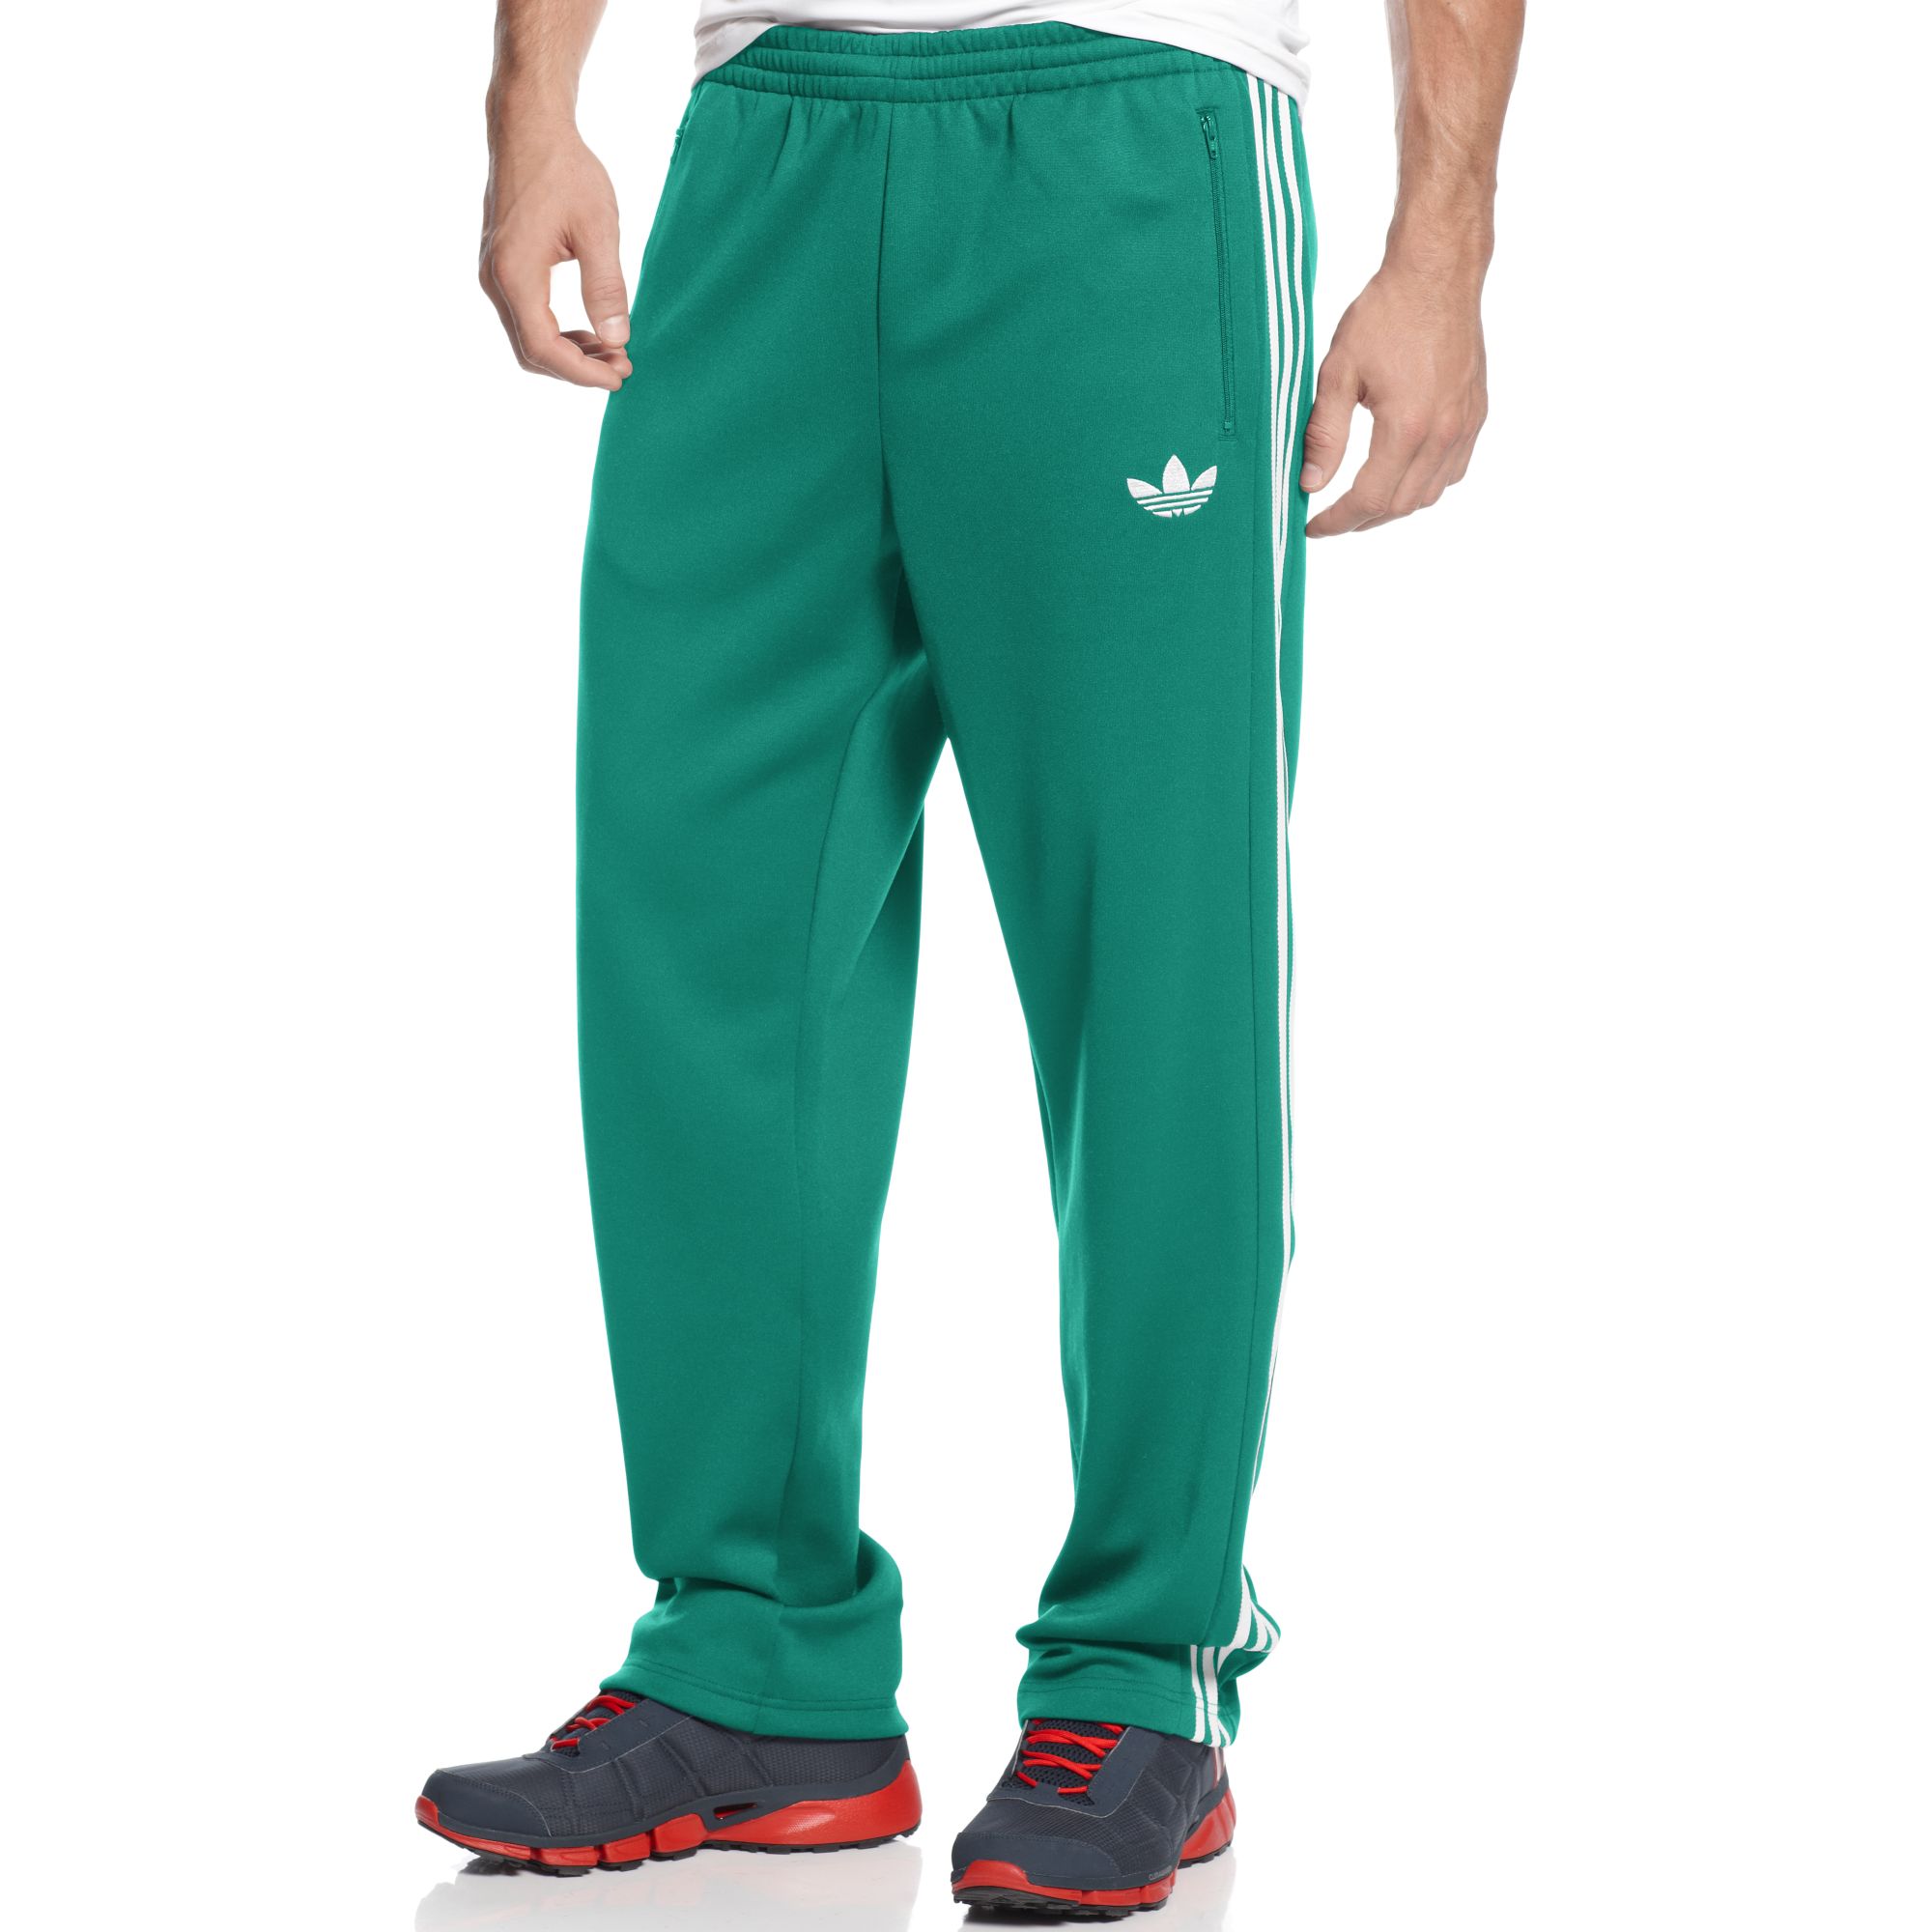 Lyst - Adidas Originals Adiicon Track Pants in Green for Men